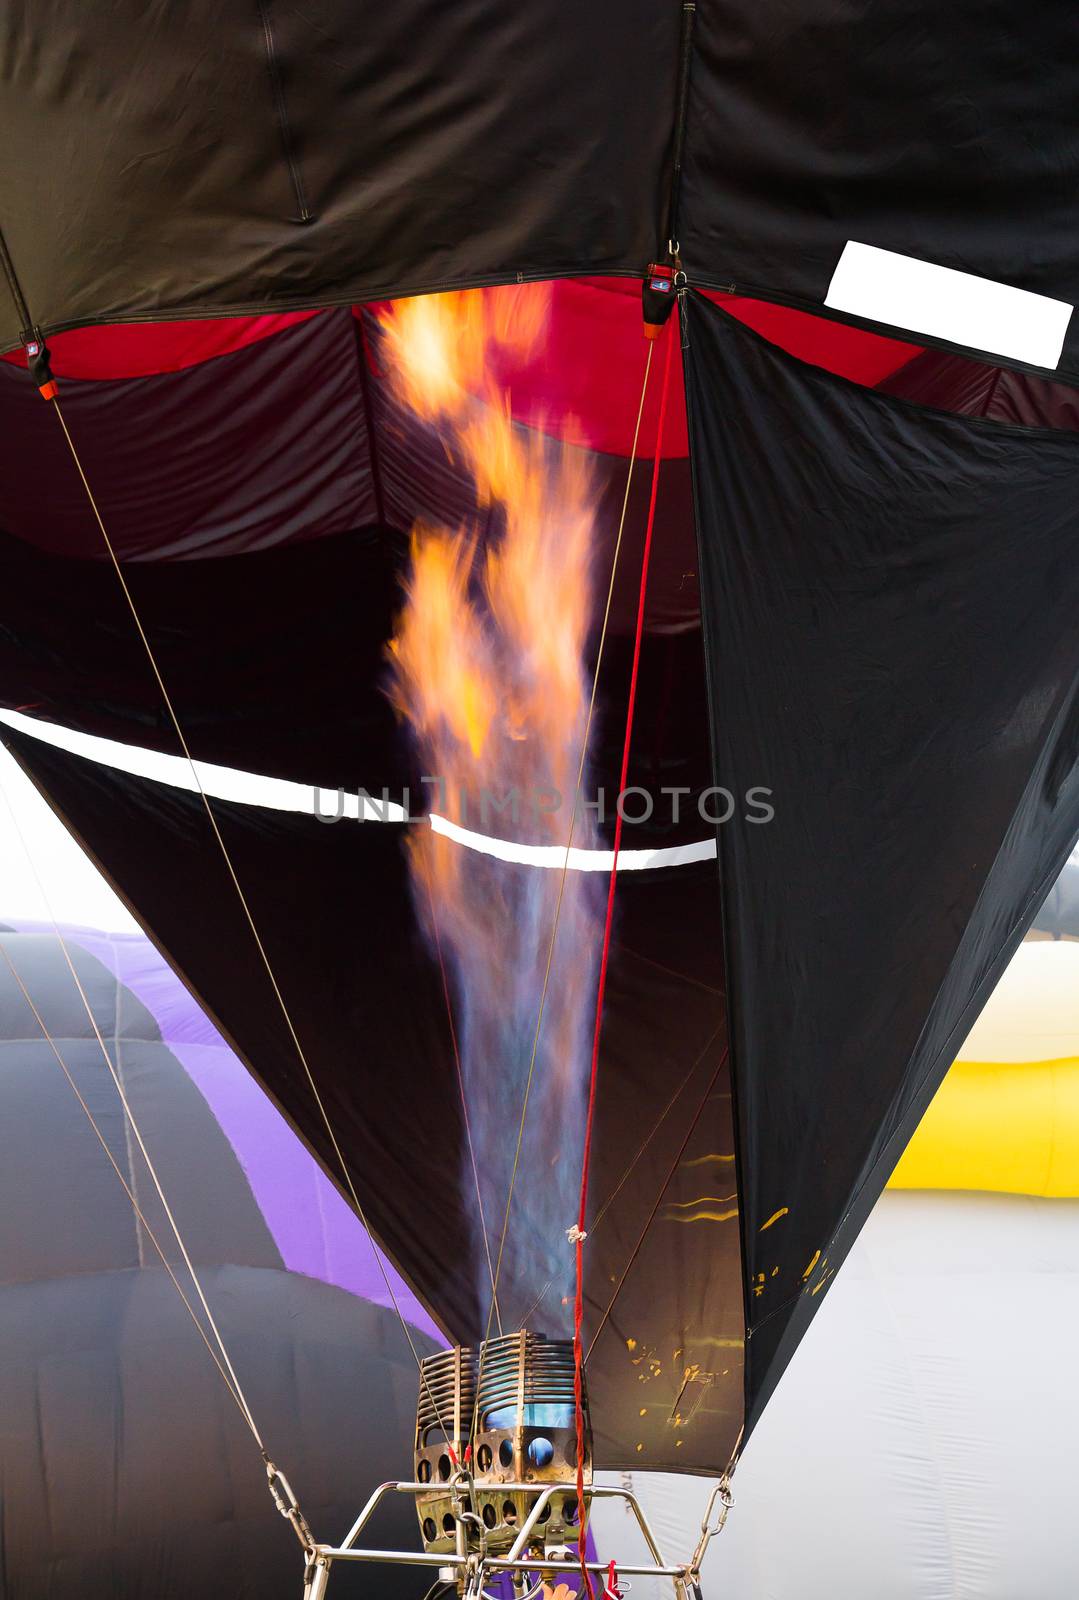 hot air ballon burner engine in action